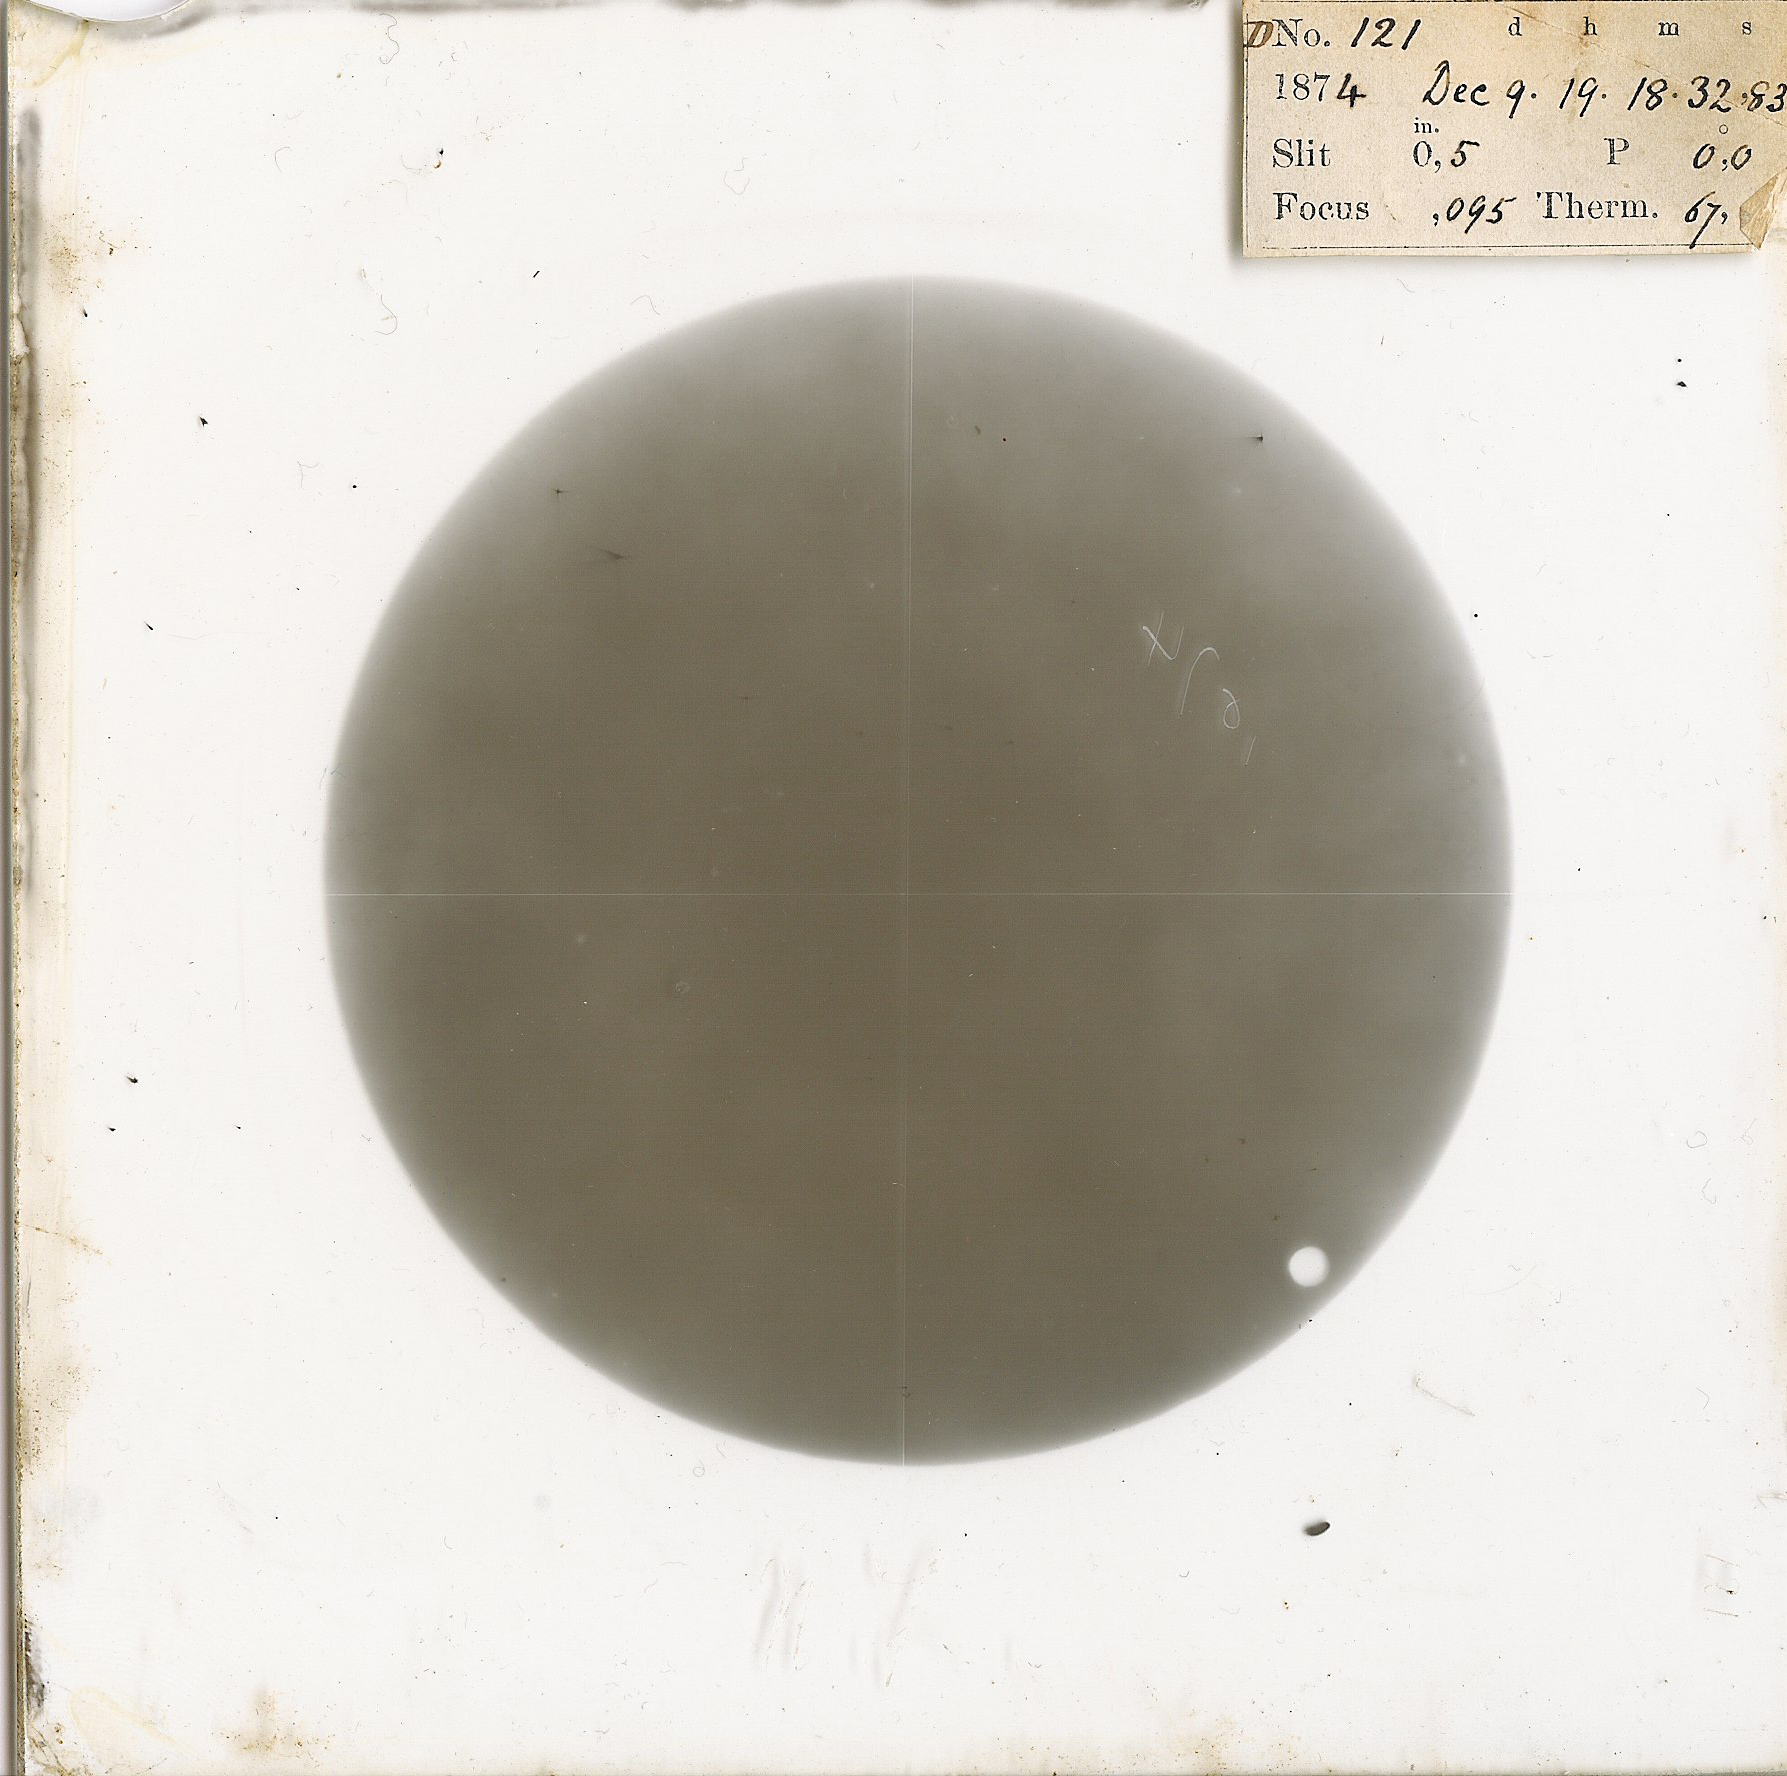 Venus transit 1874 from Melbourne heliograph